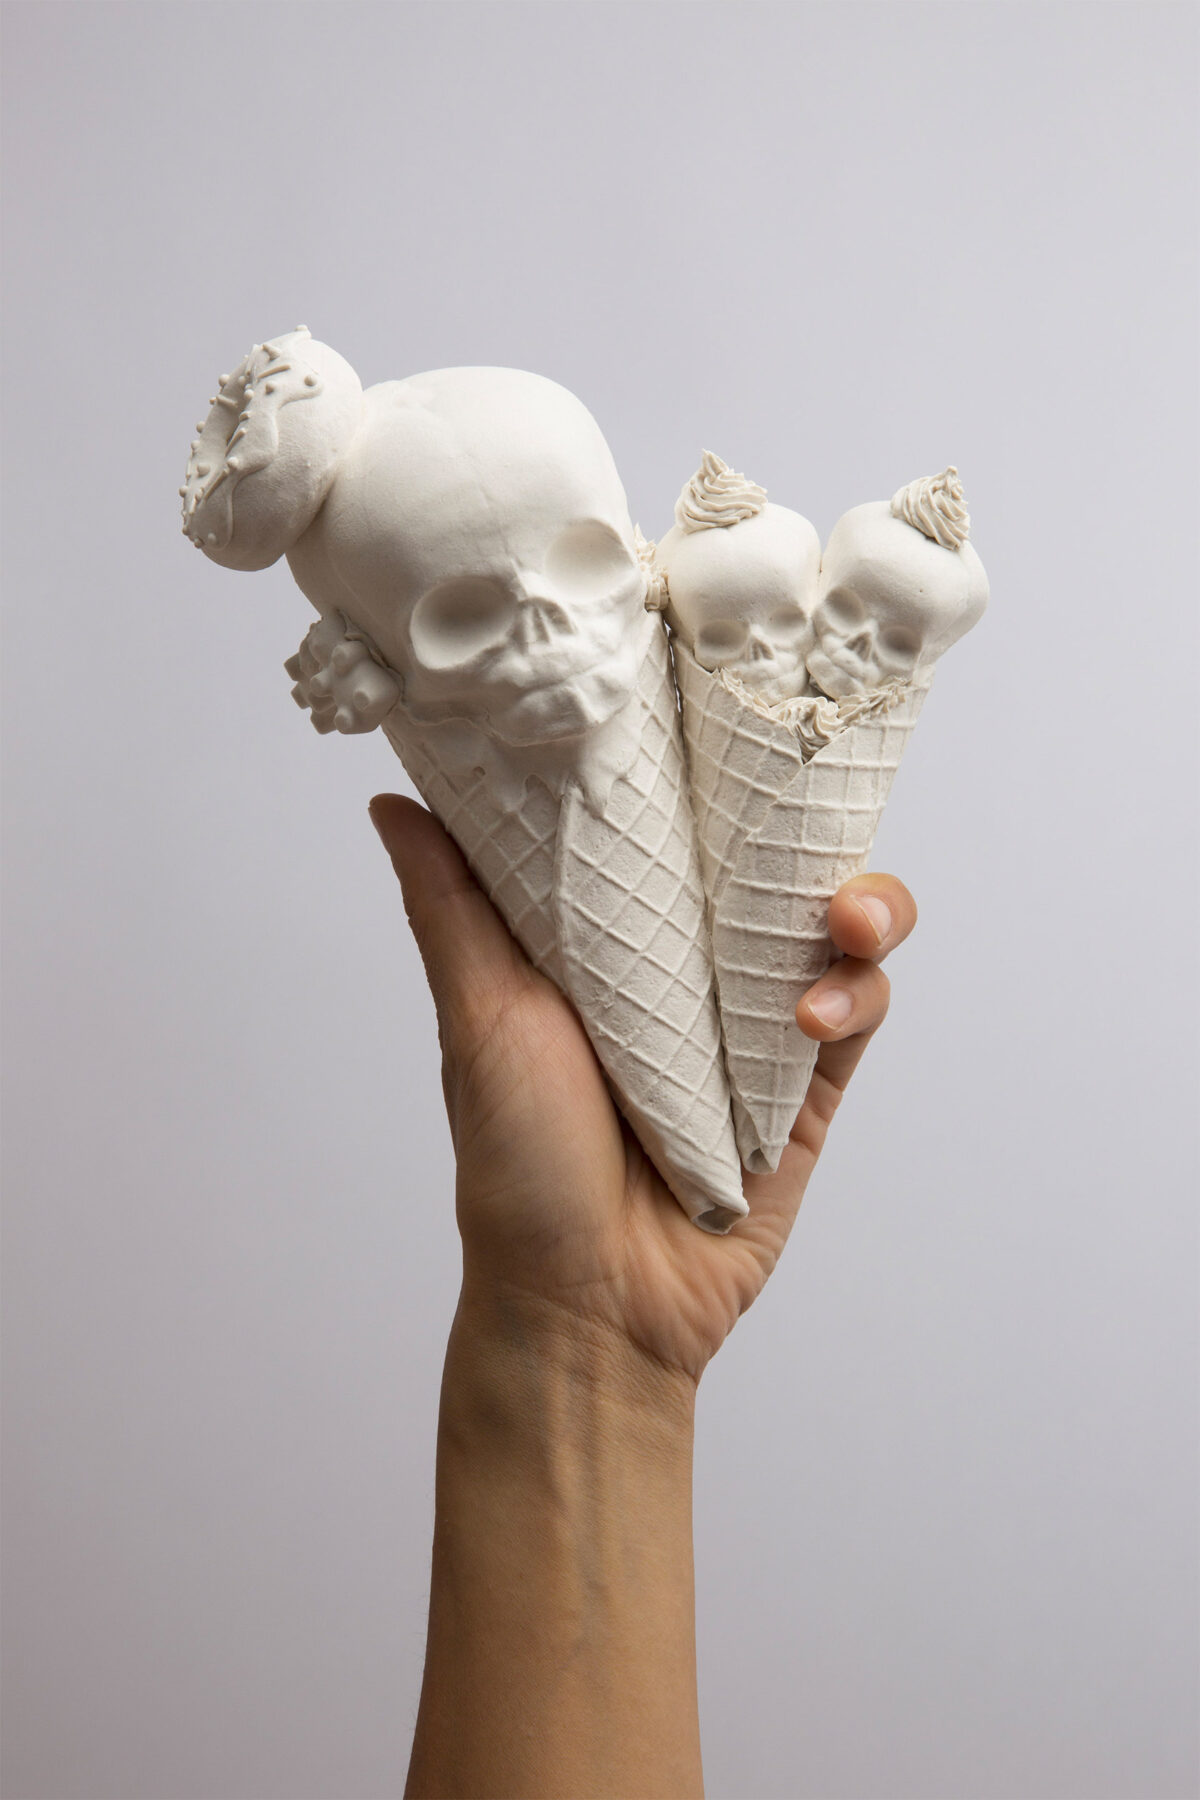 Death By Sugar Cute And Creepy Porcelain Sculptures By Jacqueline Tse 4